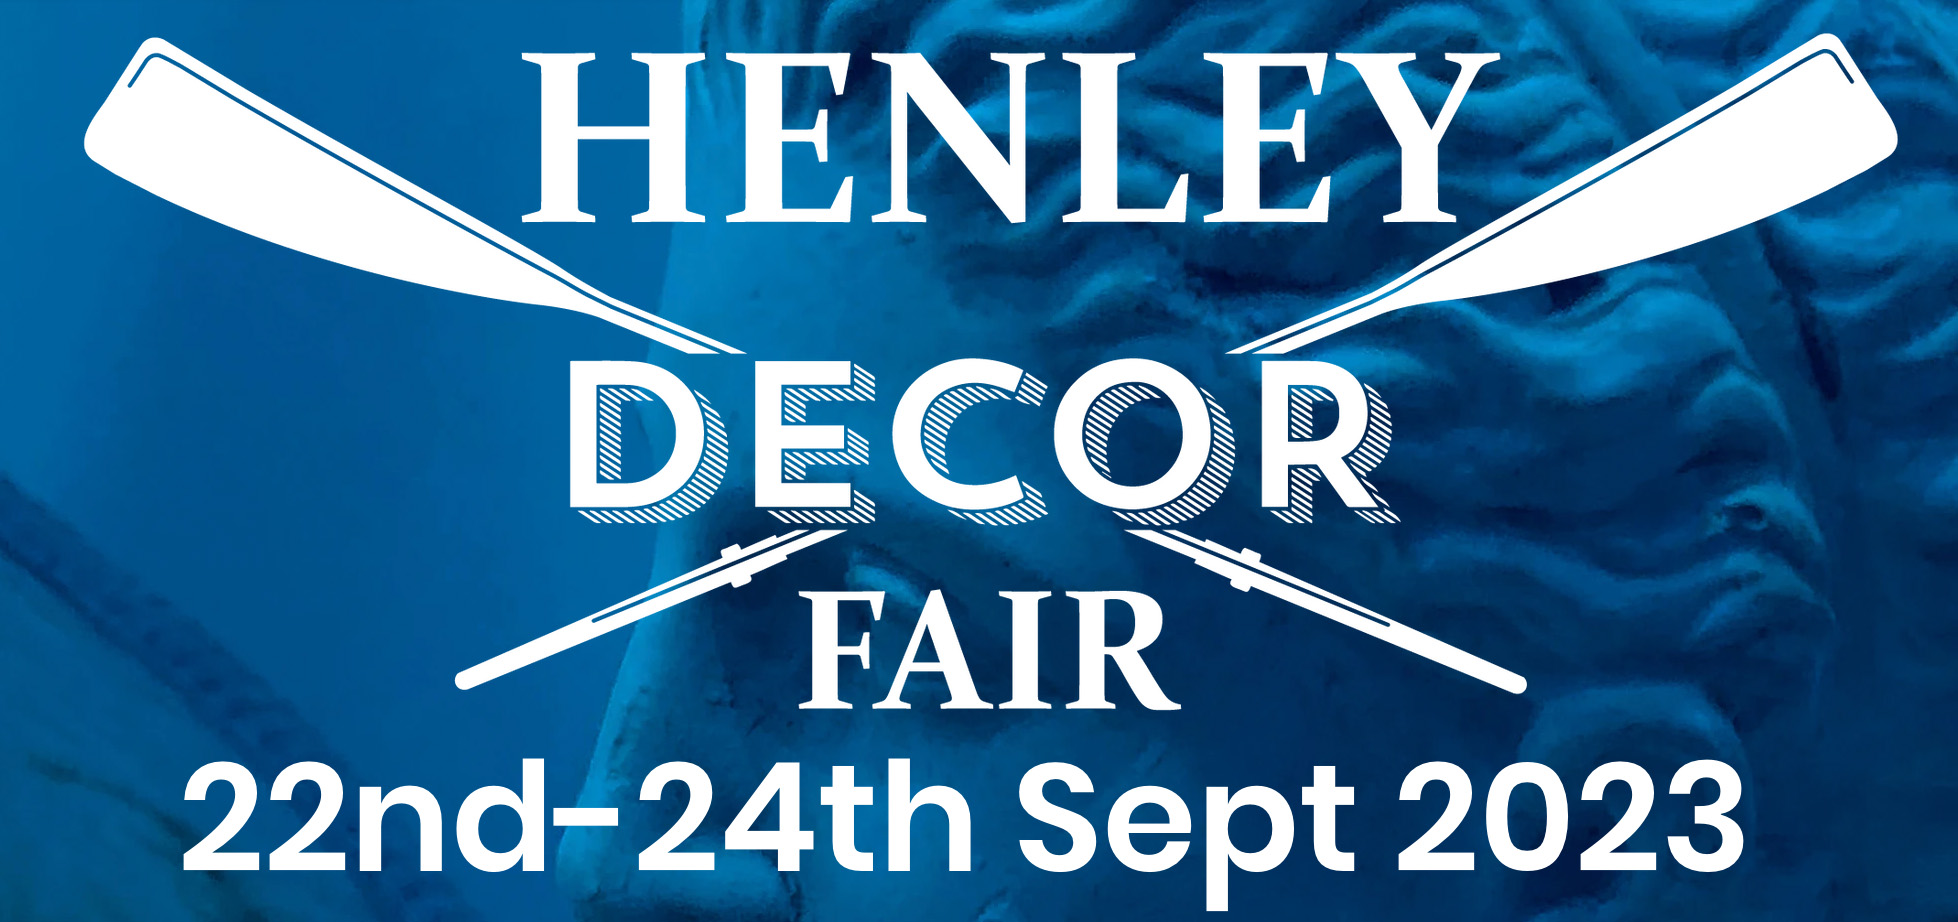 Henley Decor Fair 2023